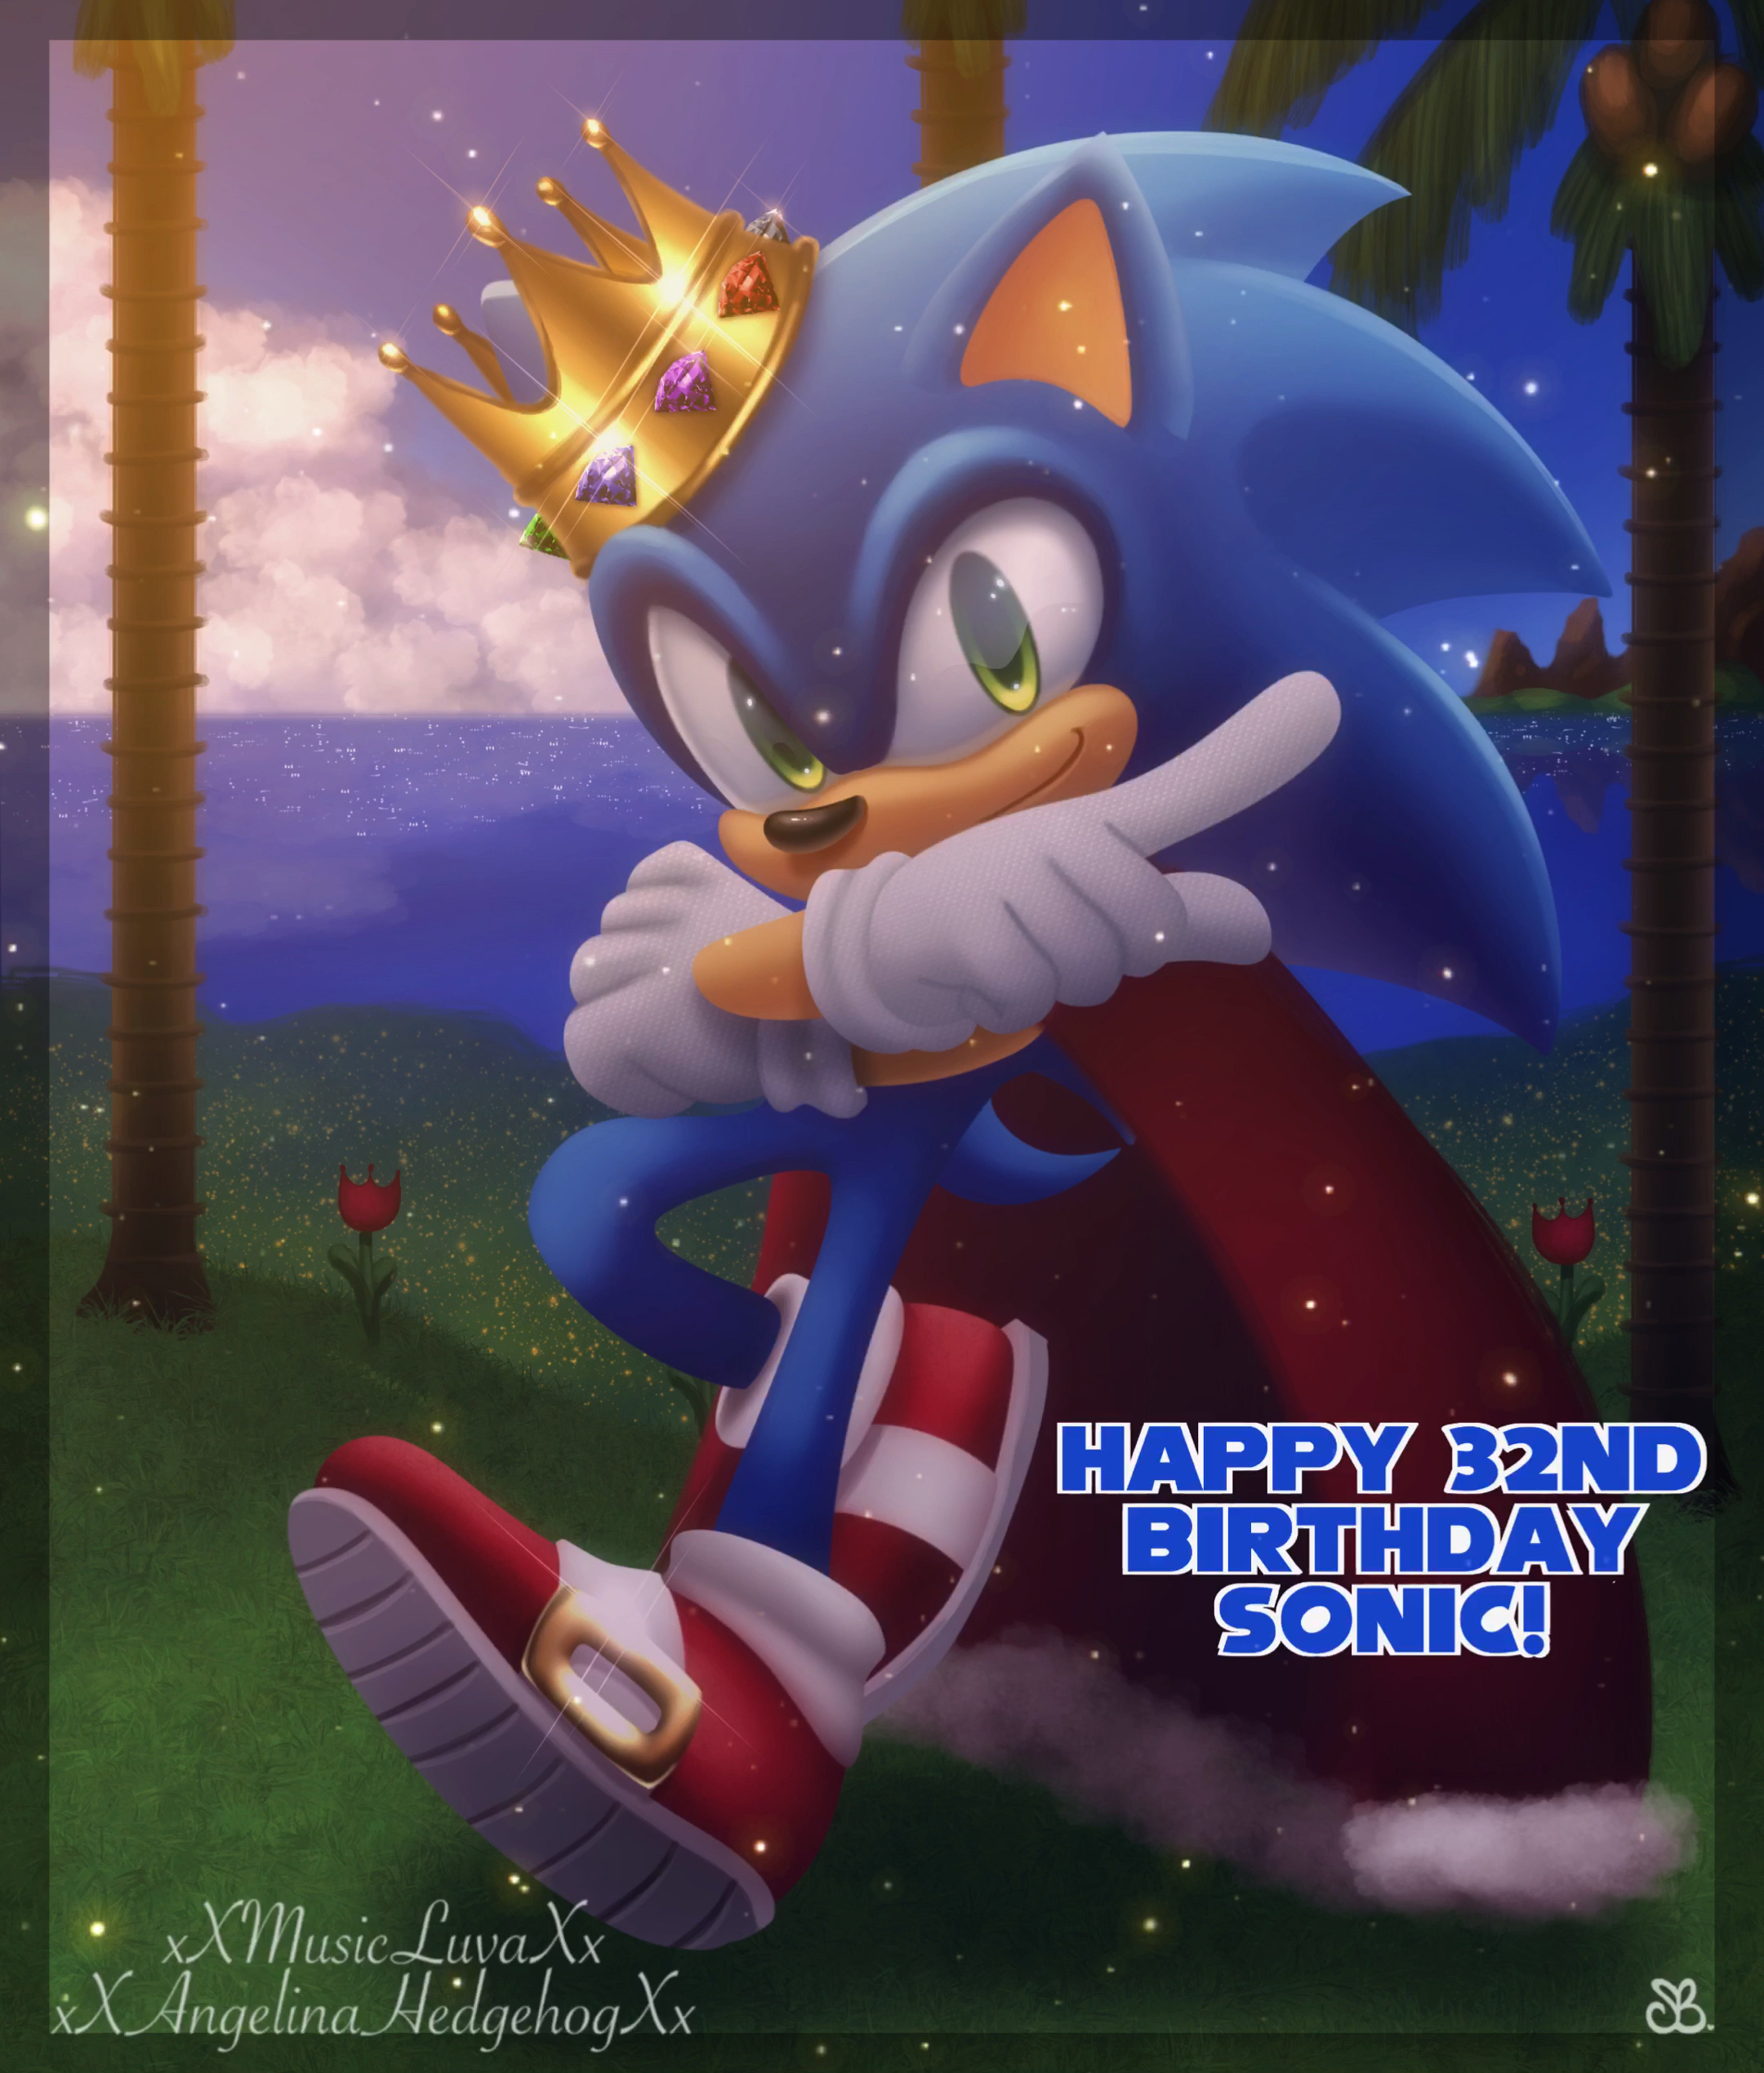 Celebrate Sonic's 32nd Birthday With Phantasy Star Online 2 New Genesis :  r/SonicTheHedgehog